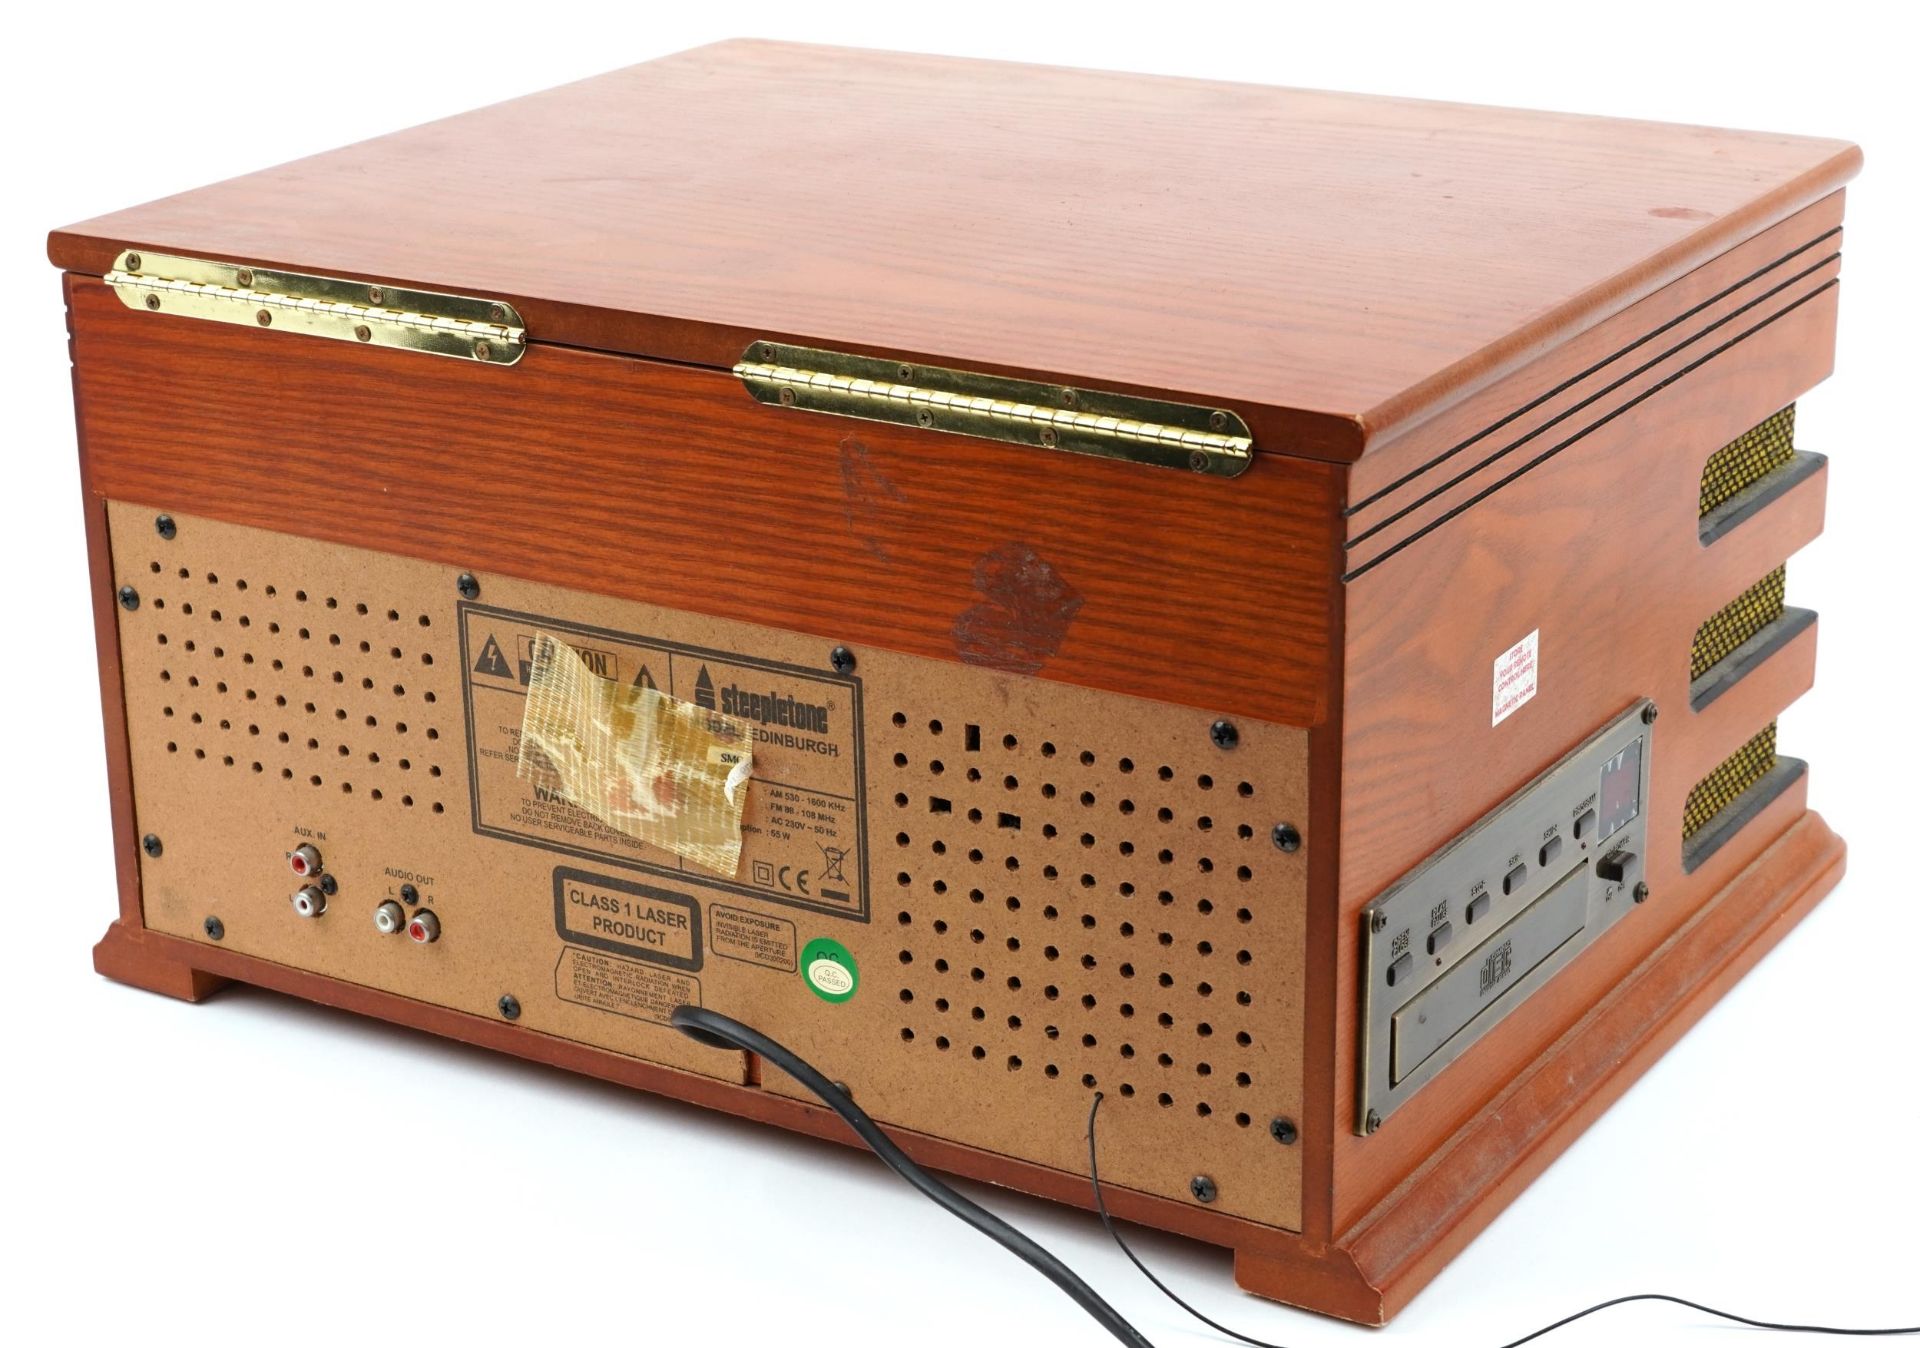 Retro Steepletone lightwood record/CD player and radio, 26cm H x 45cm W x 37cm D : For further - Image 3 of 3